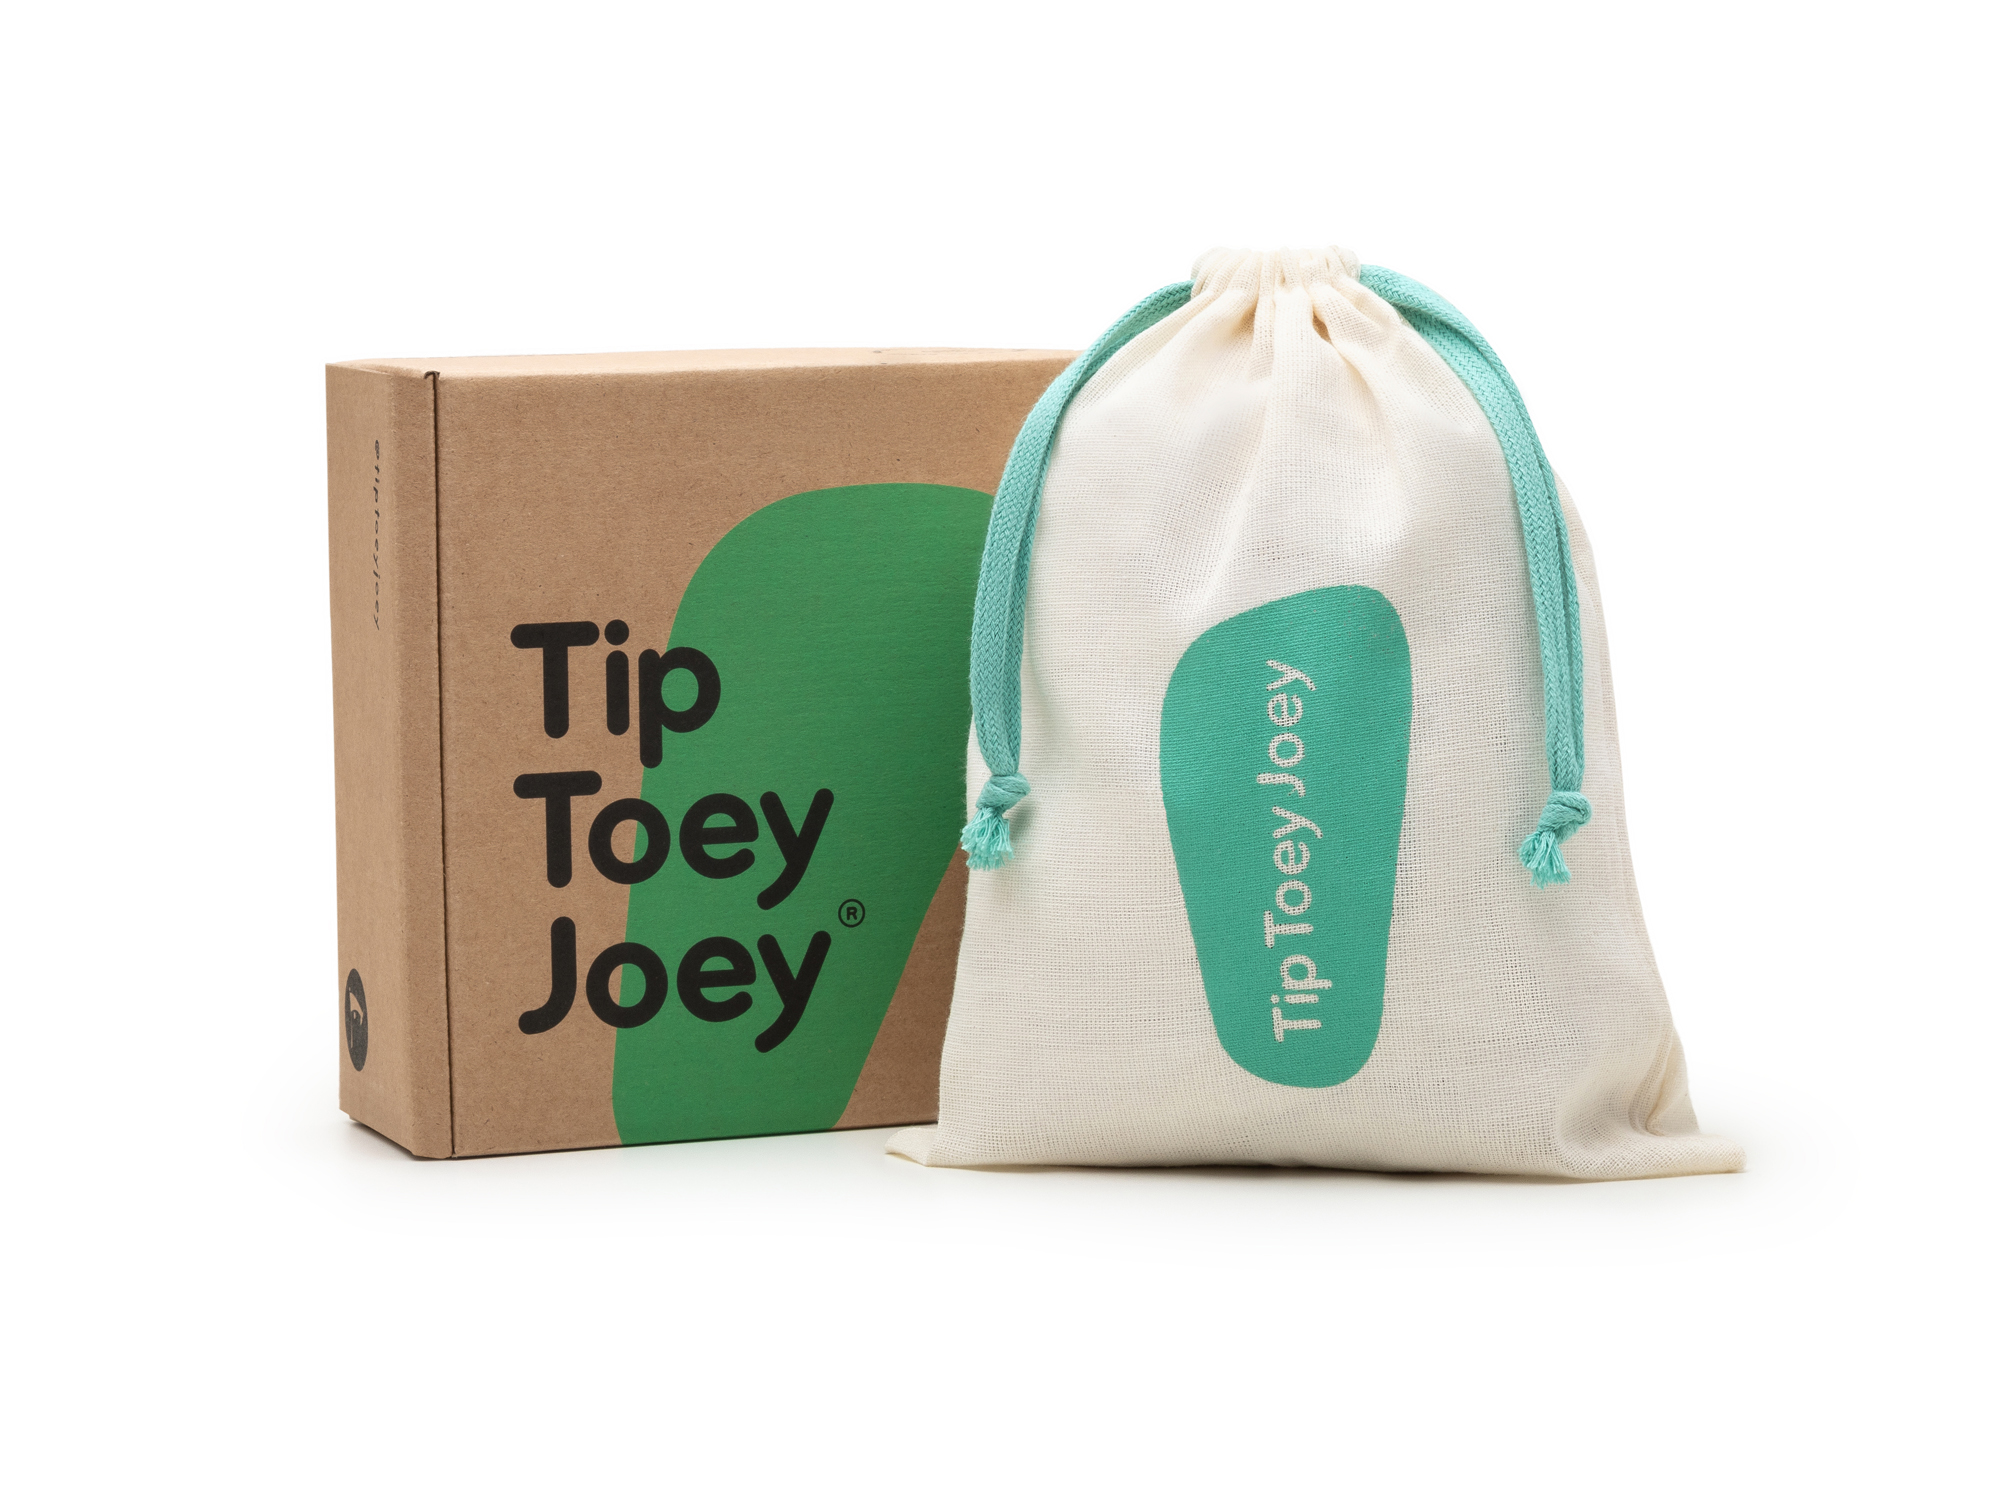 UP & GO Mary Janes for Girls Heart | Tip Toey Joey - Australia - 6